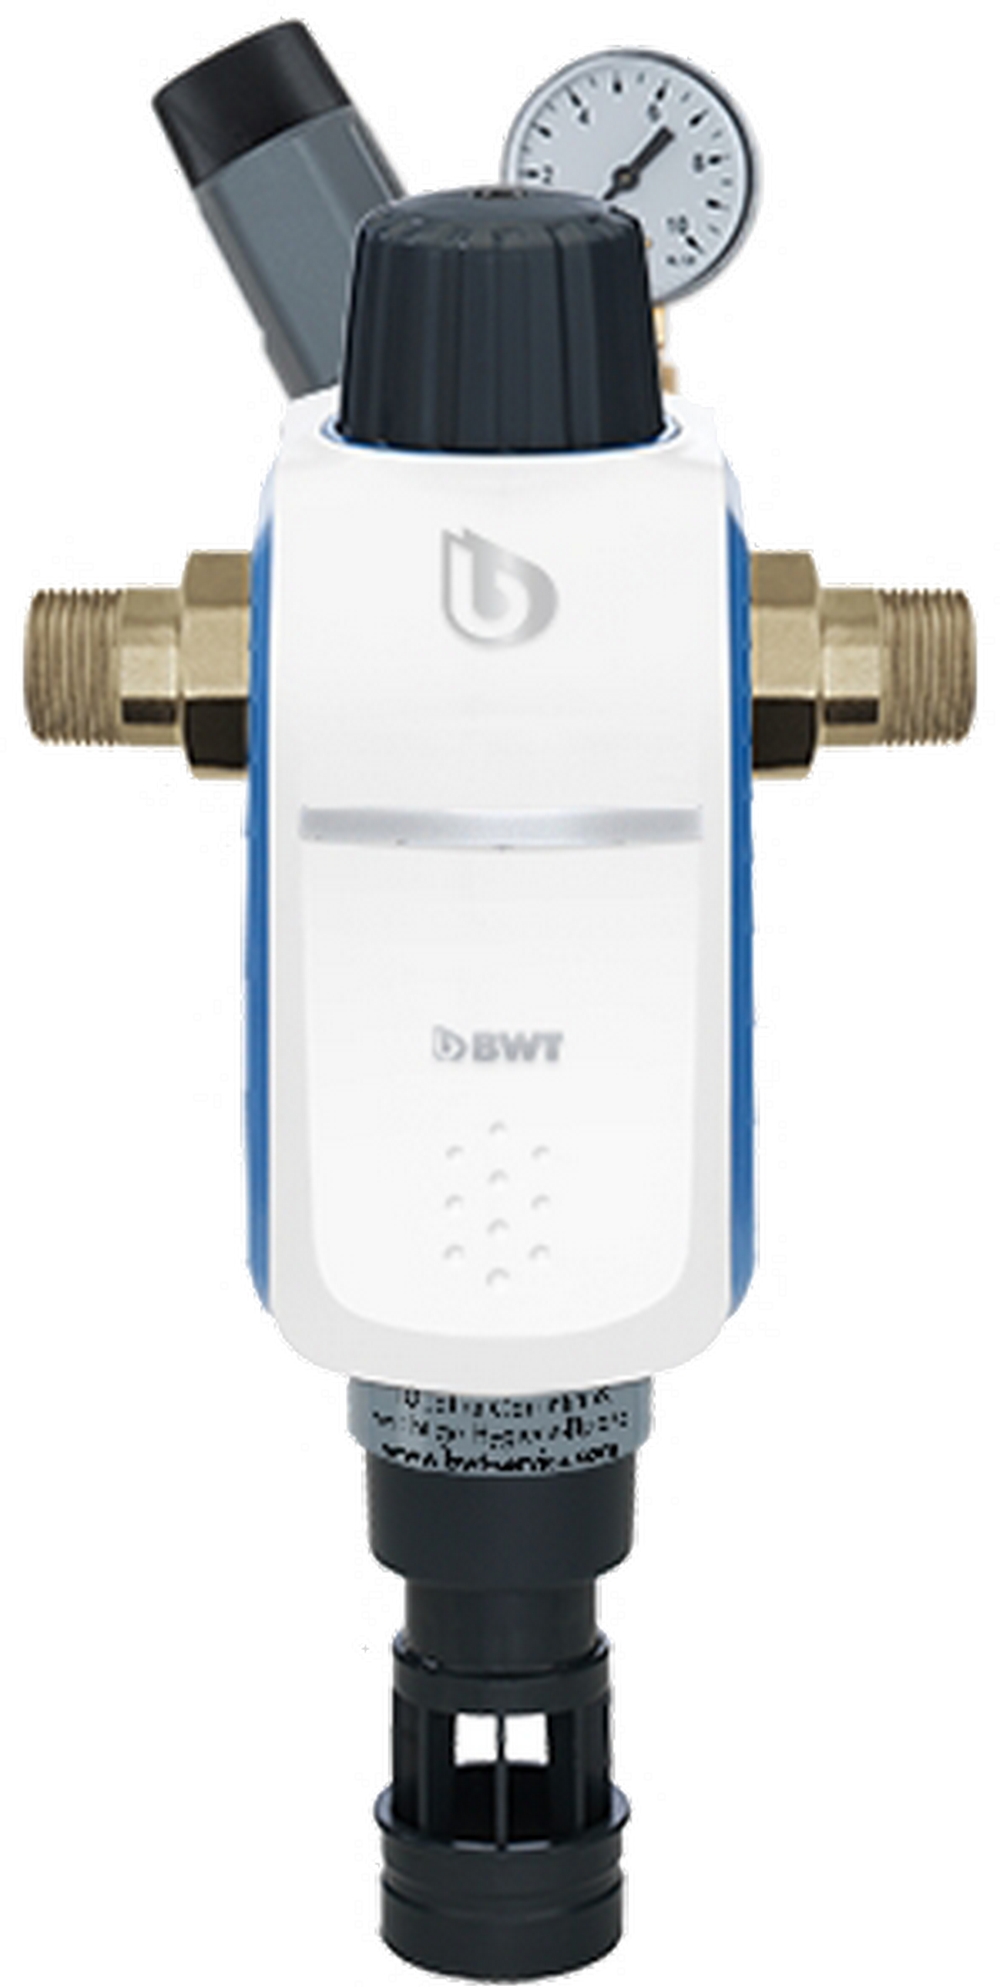 Характеристики фильтр на 90 микрон (90 мкм) BWT R1 HWS 1" с редуктором давления 840370